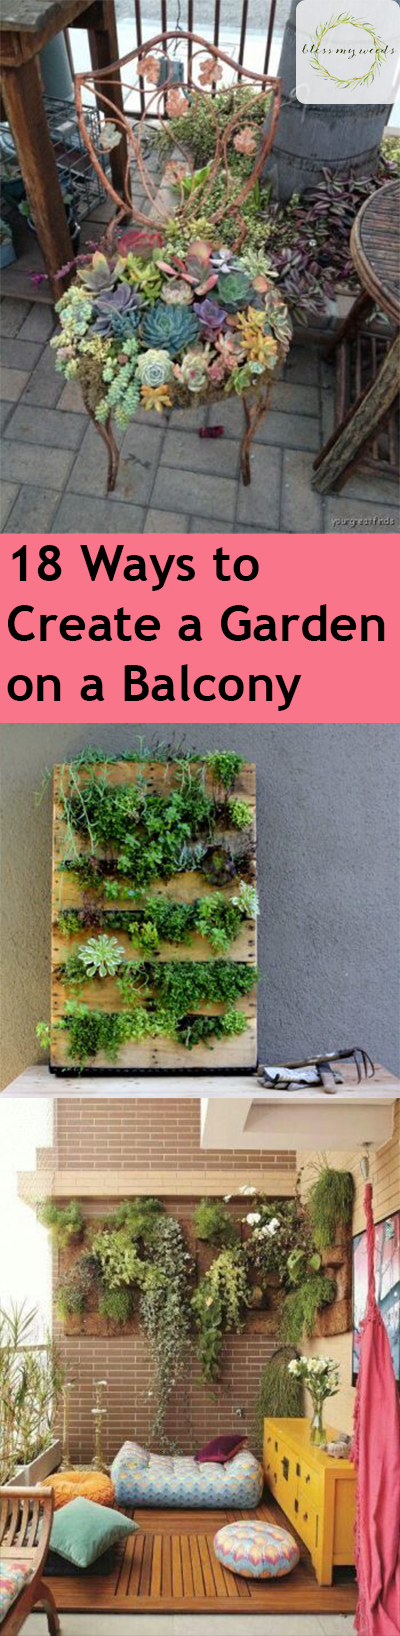 Gardening, How to Garden in Small Spaces, Balcony Gardens, Small Space Gardening Tips, How to Grow a Garden on a Balcony, Gardening 101, Gardening Tips and Tricks, Gardening In Apartments, Apartment Gardening, Popular Pin 